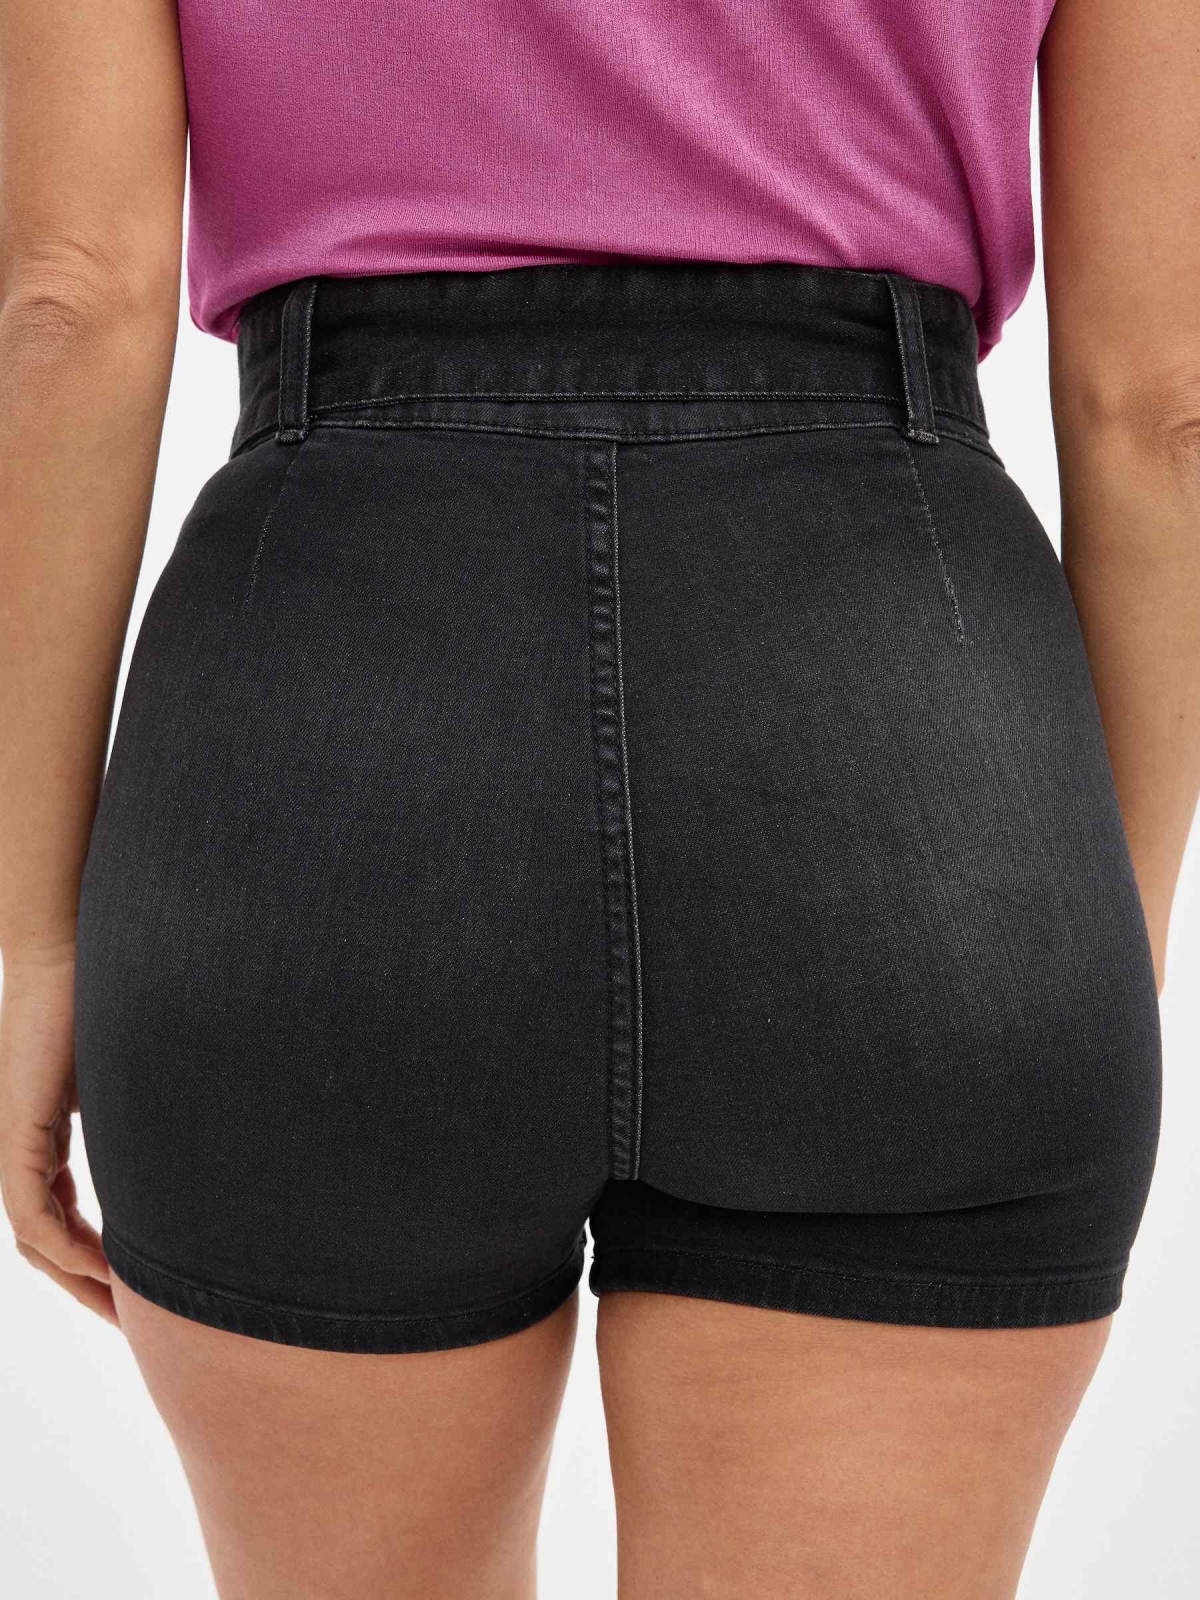 Denim shorts with belt black detail view